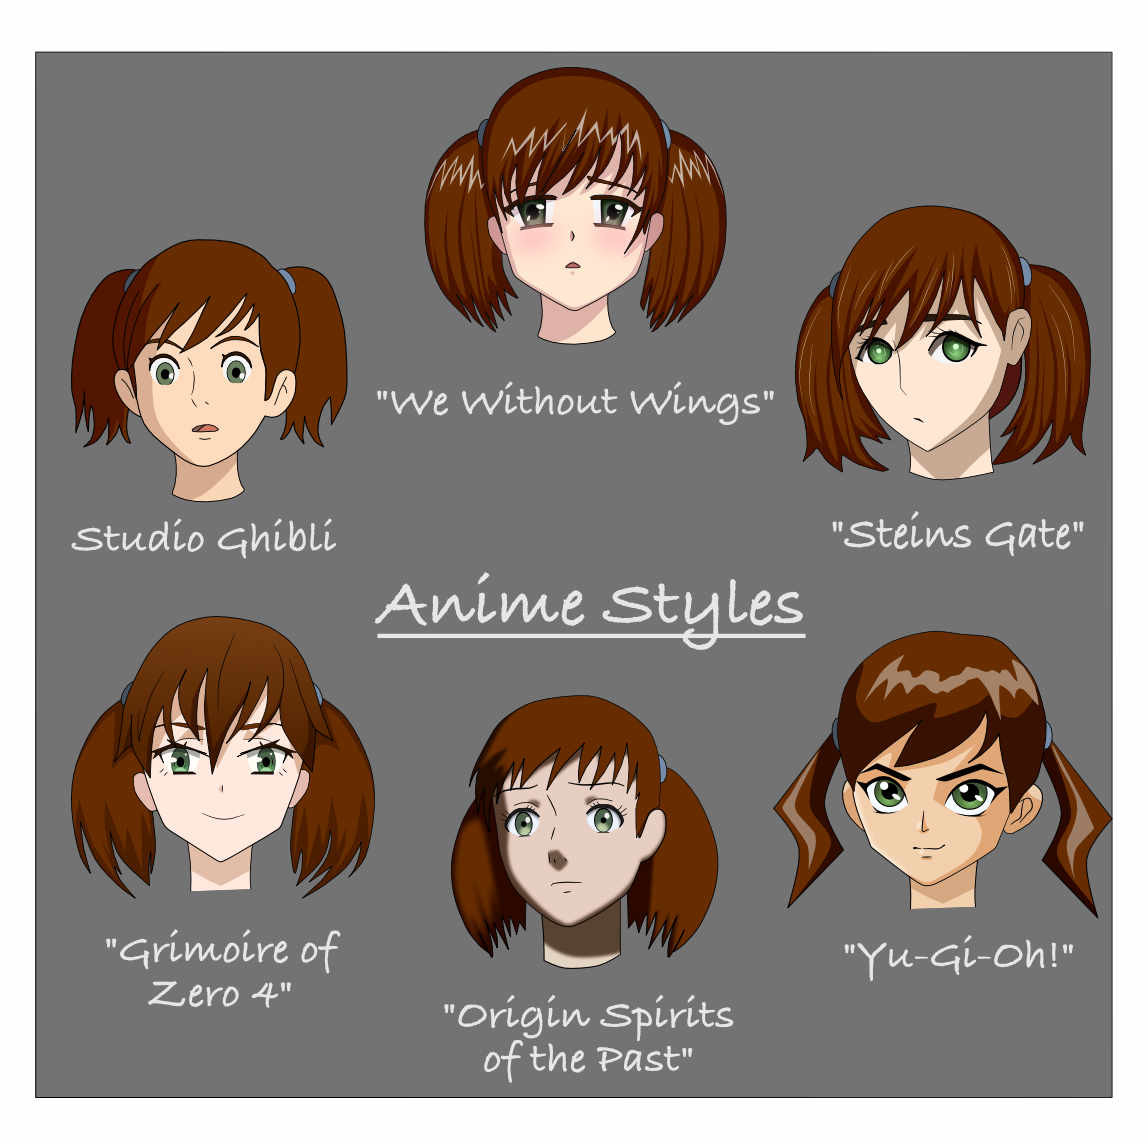 ArtStation - Anime styles